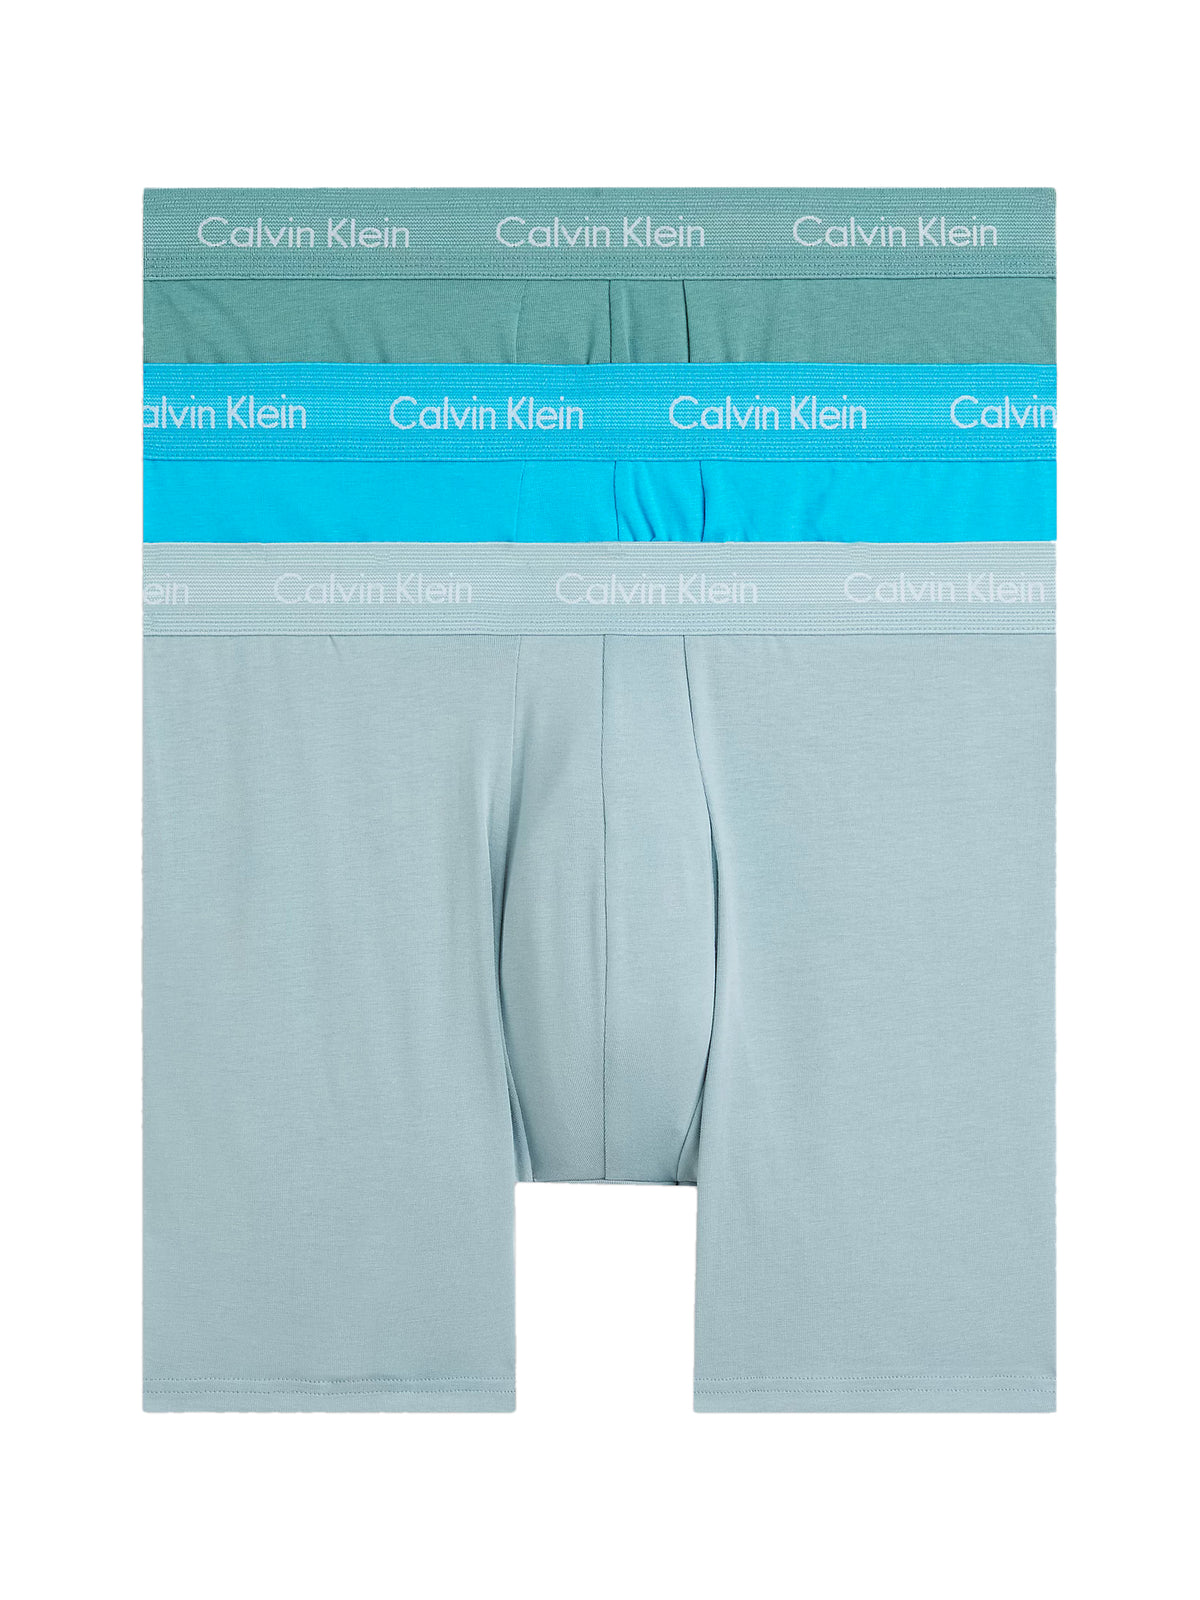 Calvin Klein Mens Boxer Briefs - Classic Fit (3-Pack), 01, Nb1770A, Vivid Blue/Arona/Sagebush Green